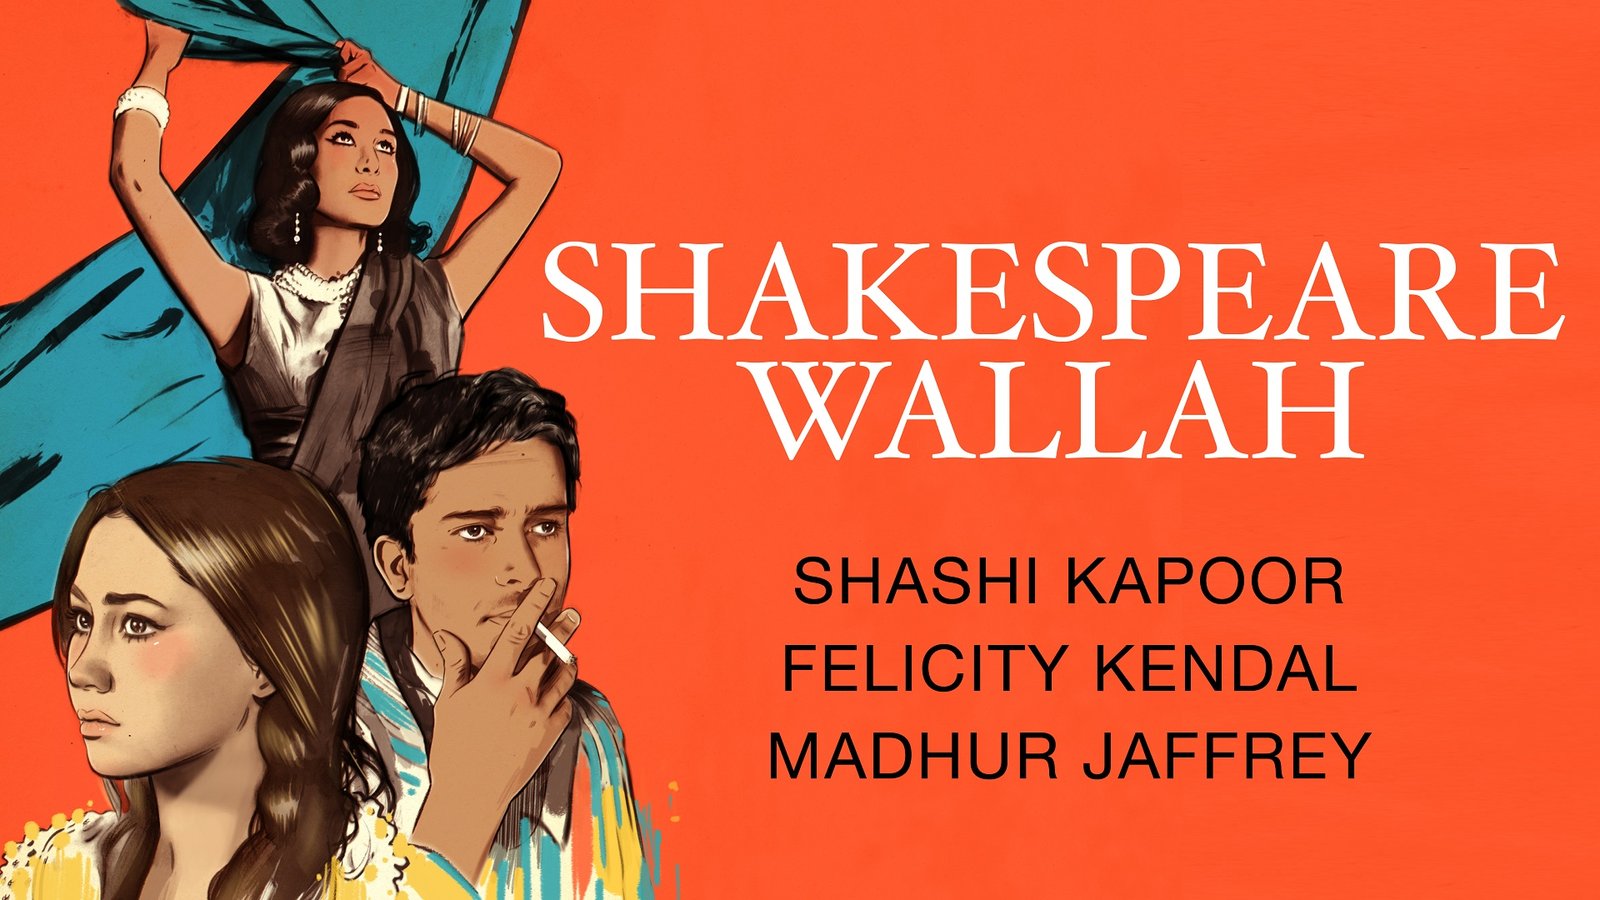 Shakespeare Wallah